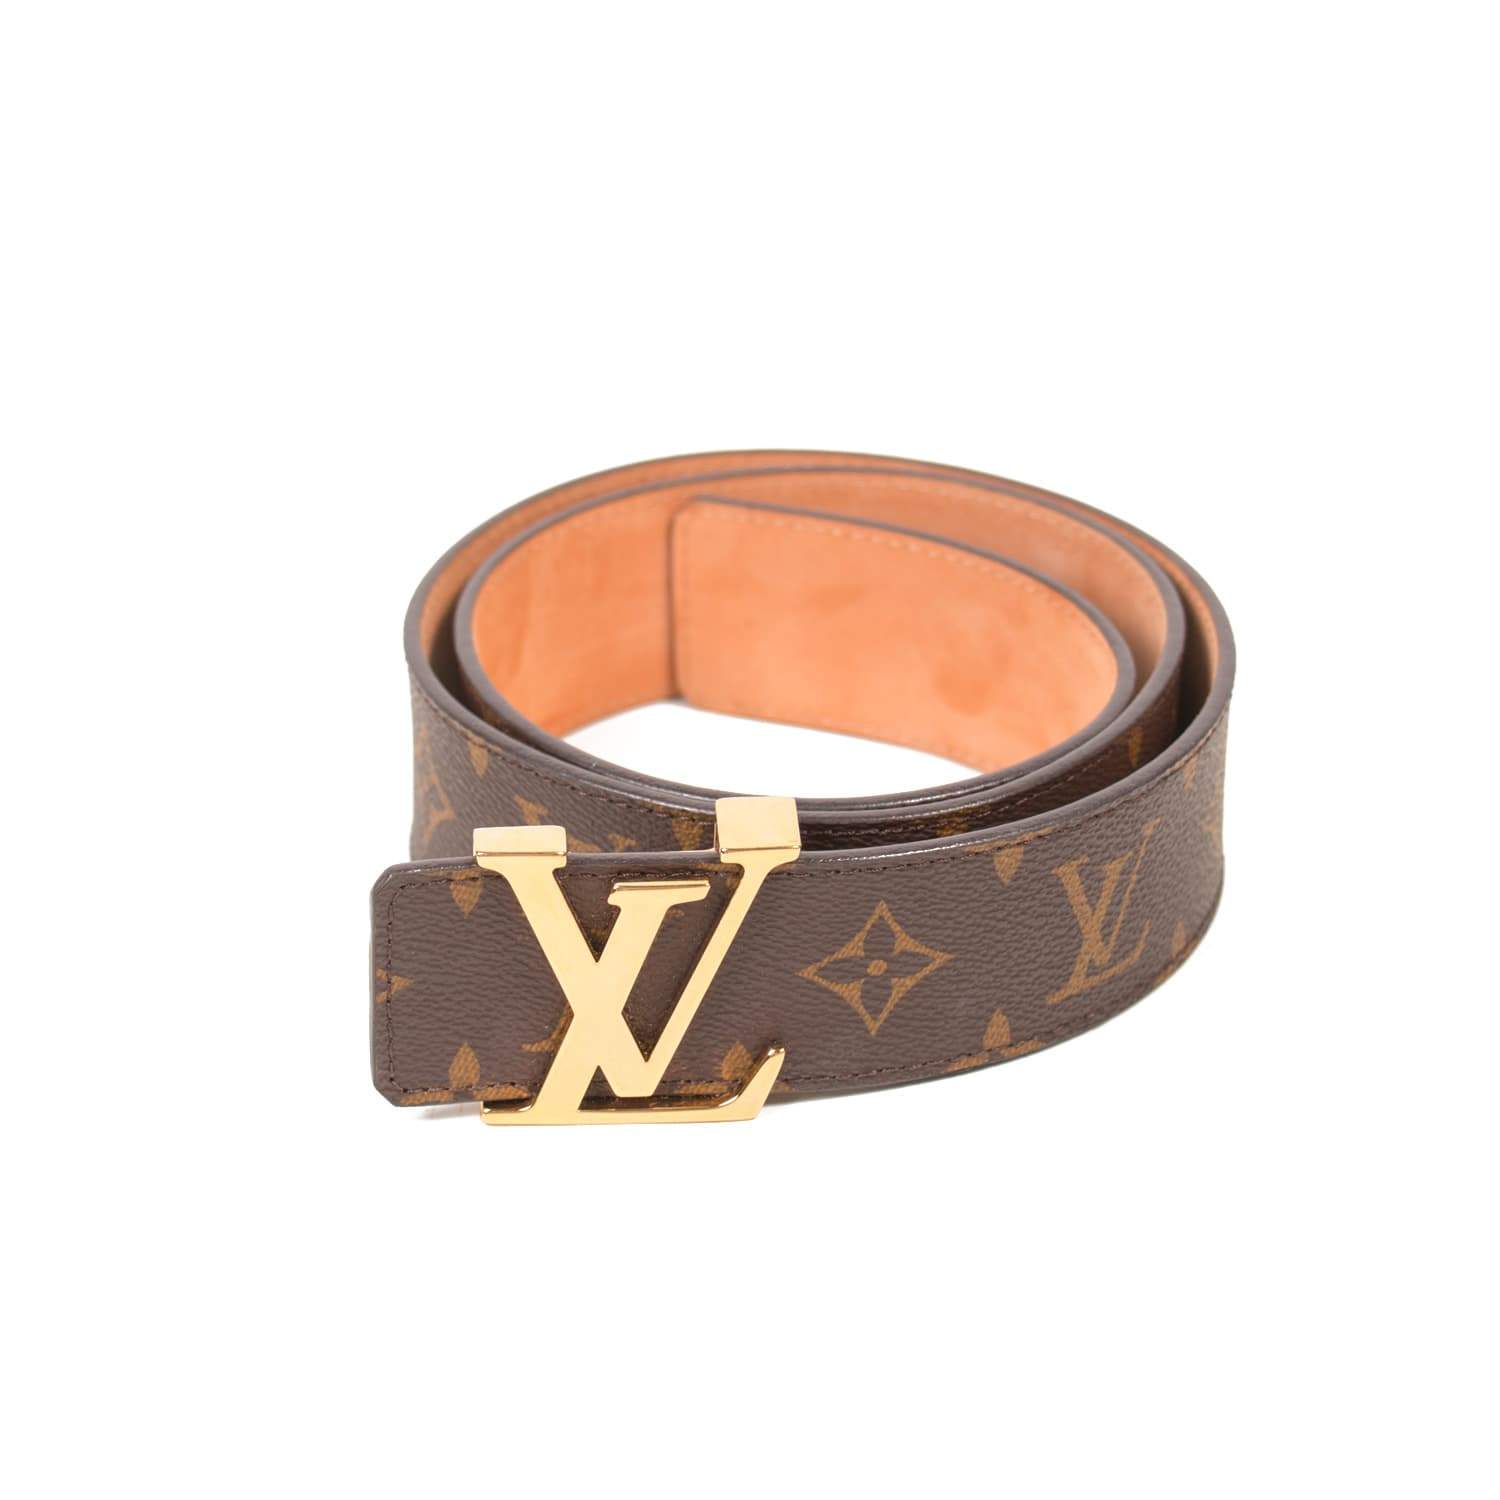 Louis Vuitton Lv Gold Buckle Belt